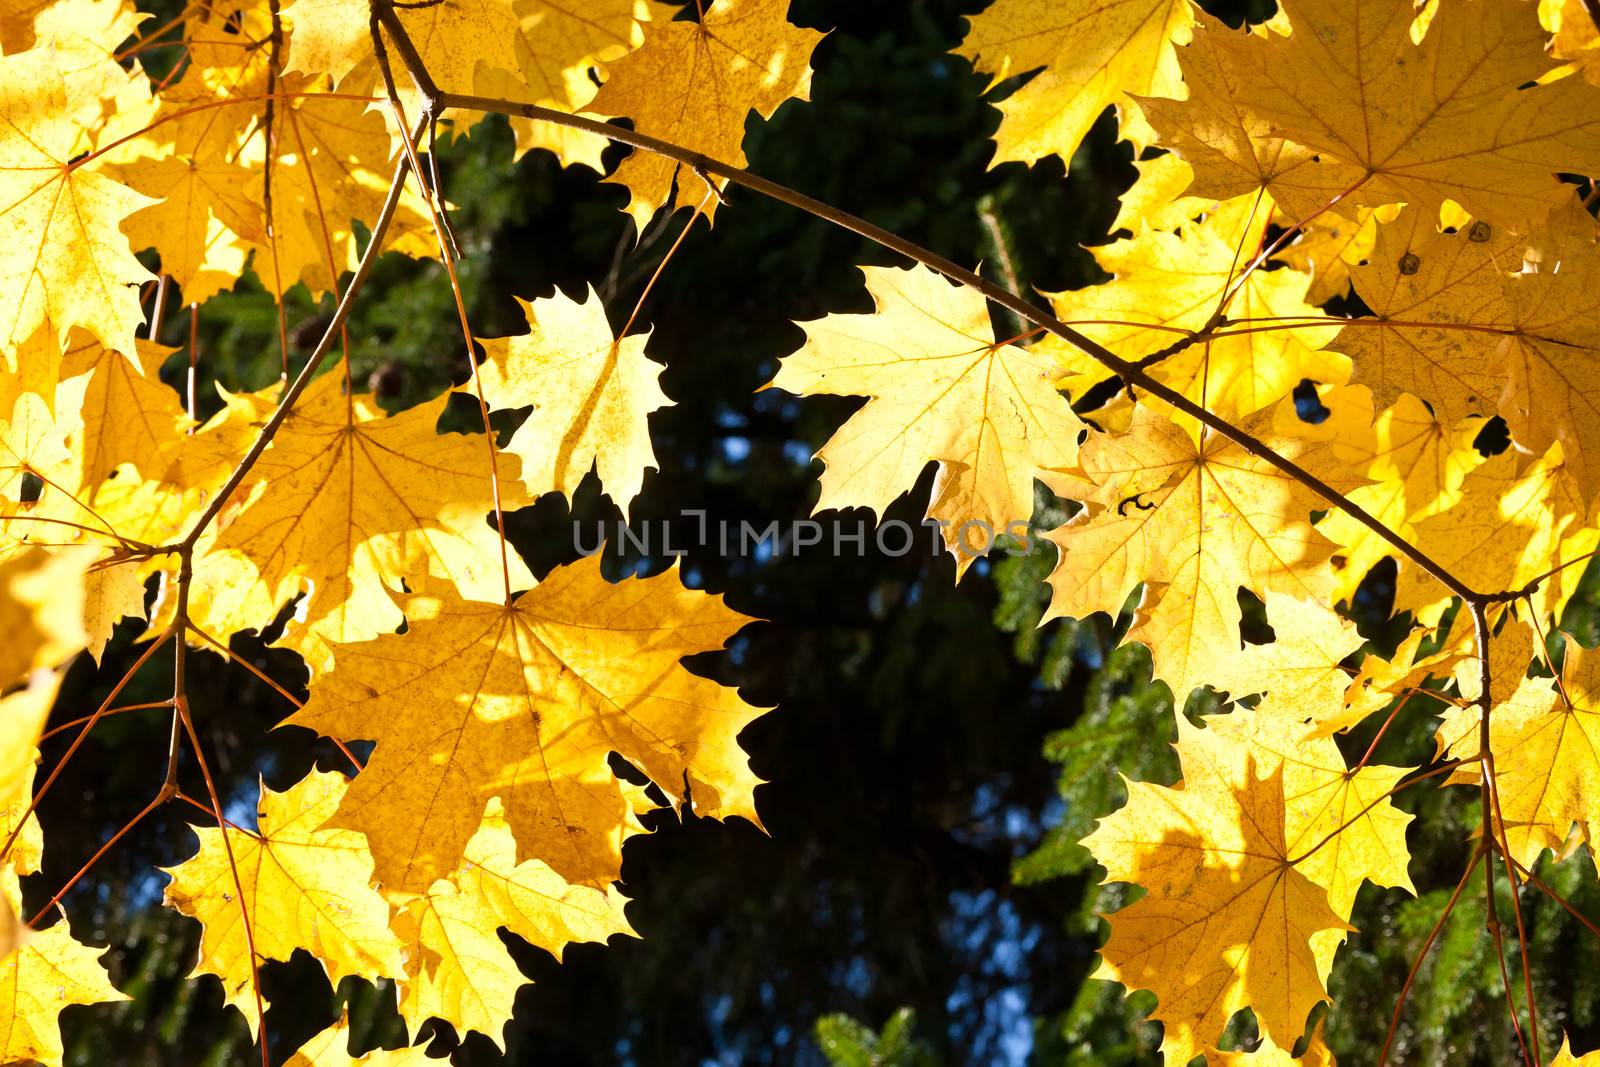 Beautiful photo of autumn golden yellow maple leaves